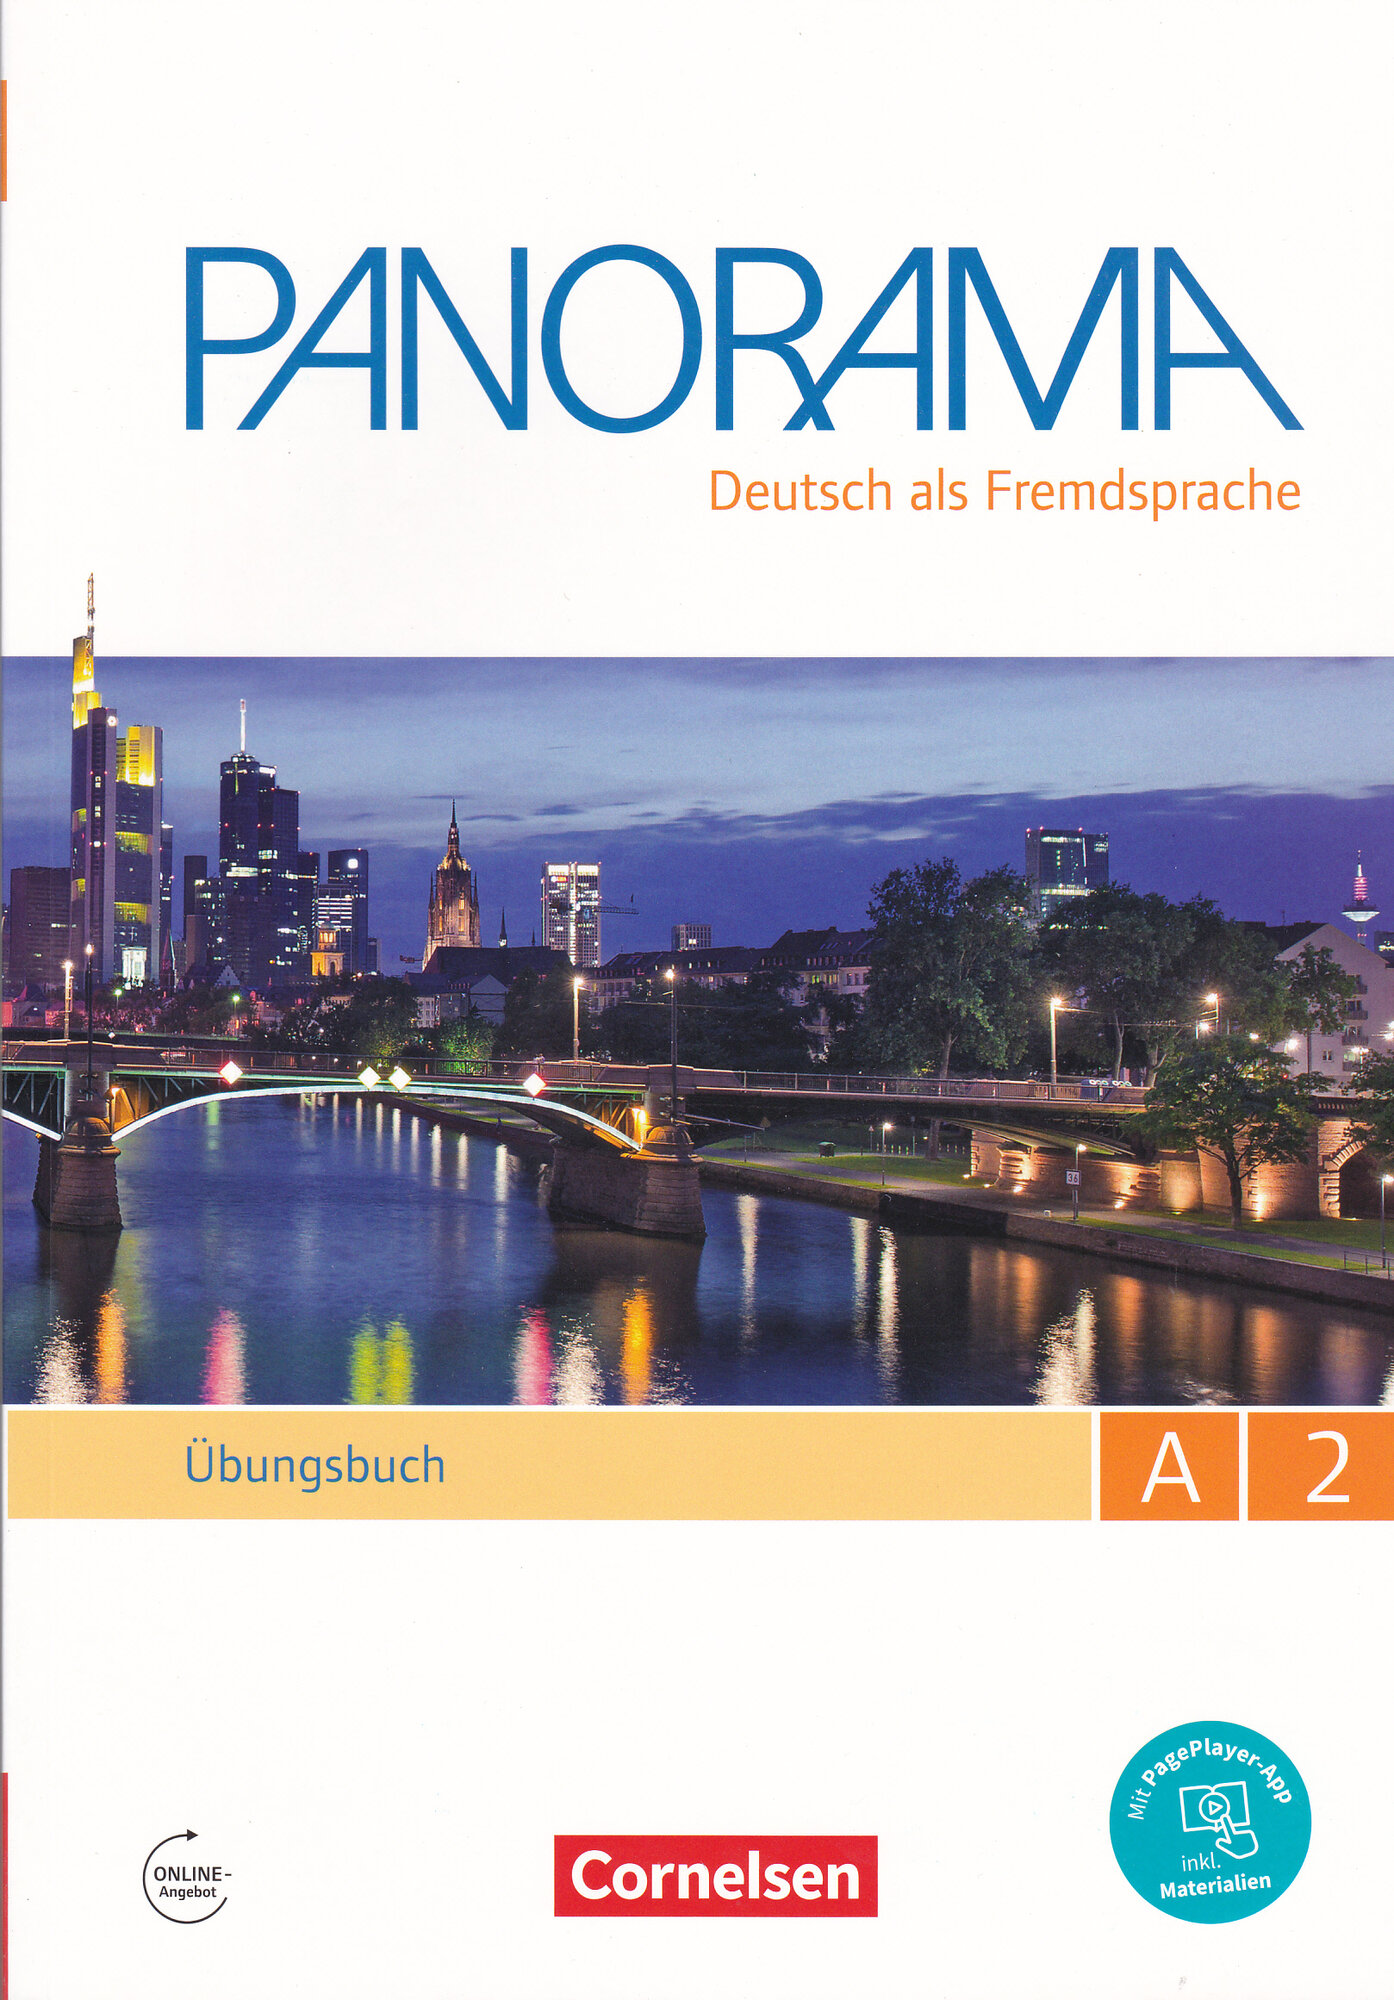 Panorama A2 Uebungsbuch mit Audio-CD DaF